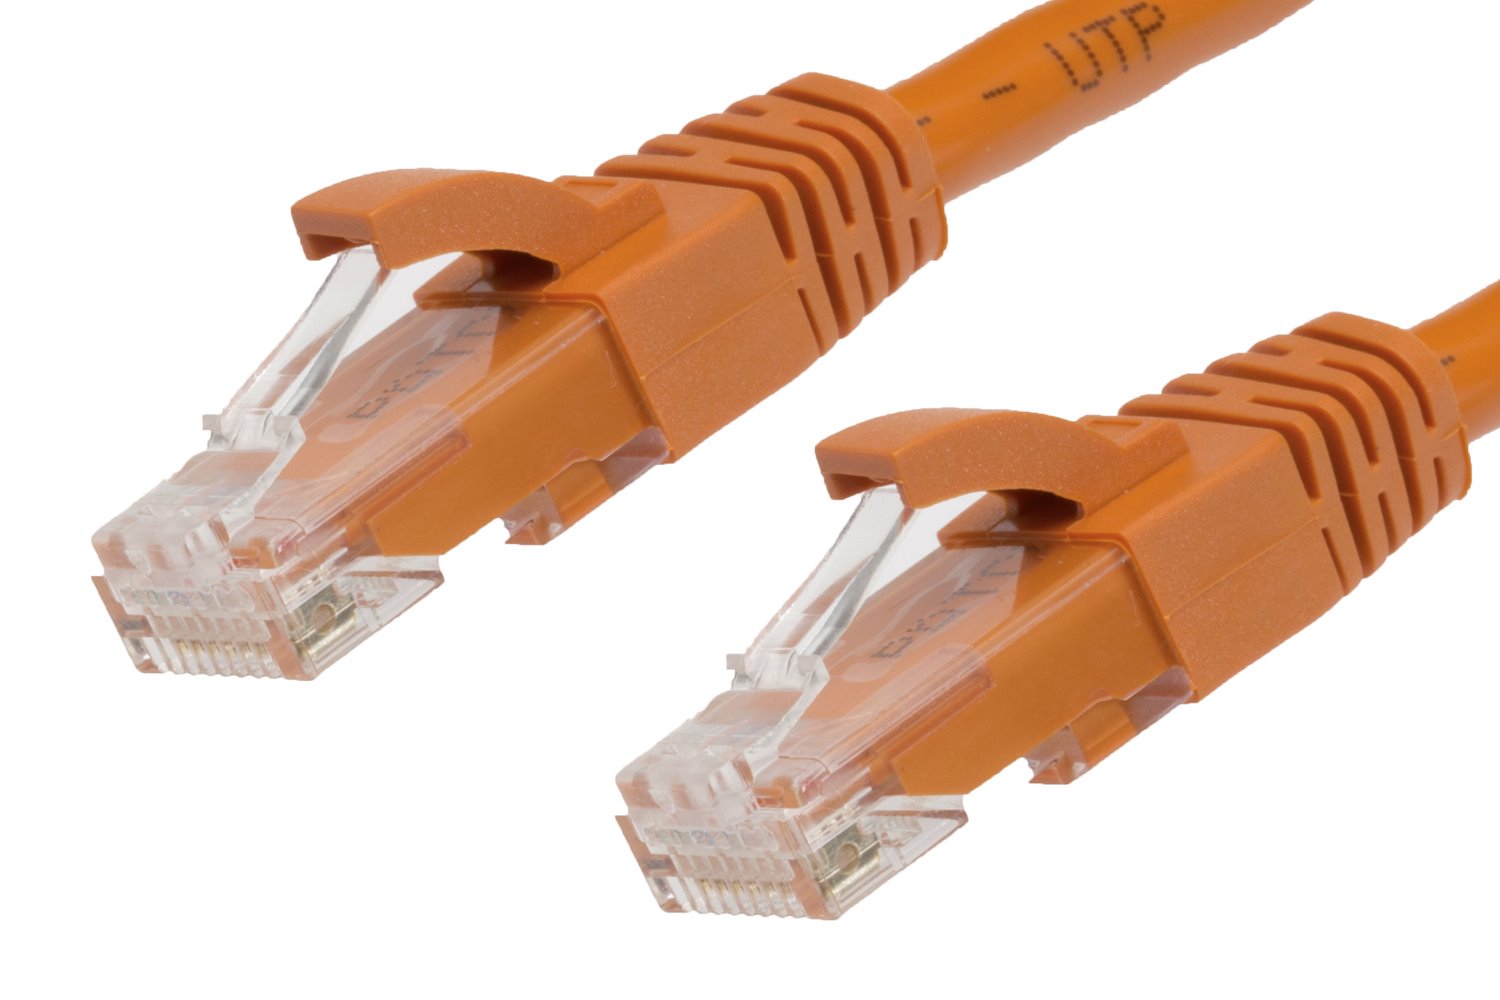 4Cabling 3M RJ45 Cat6 Ethernet Cable. Orange